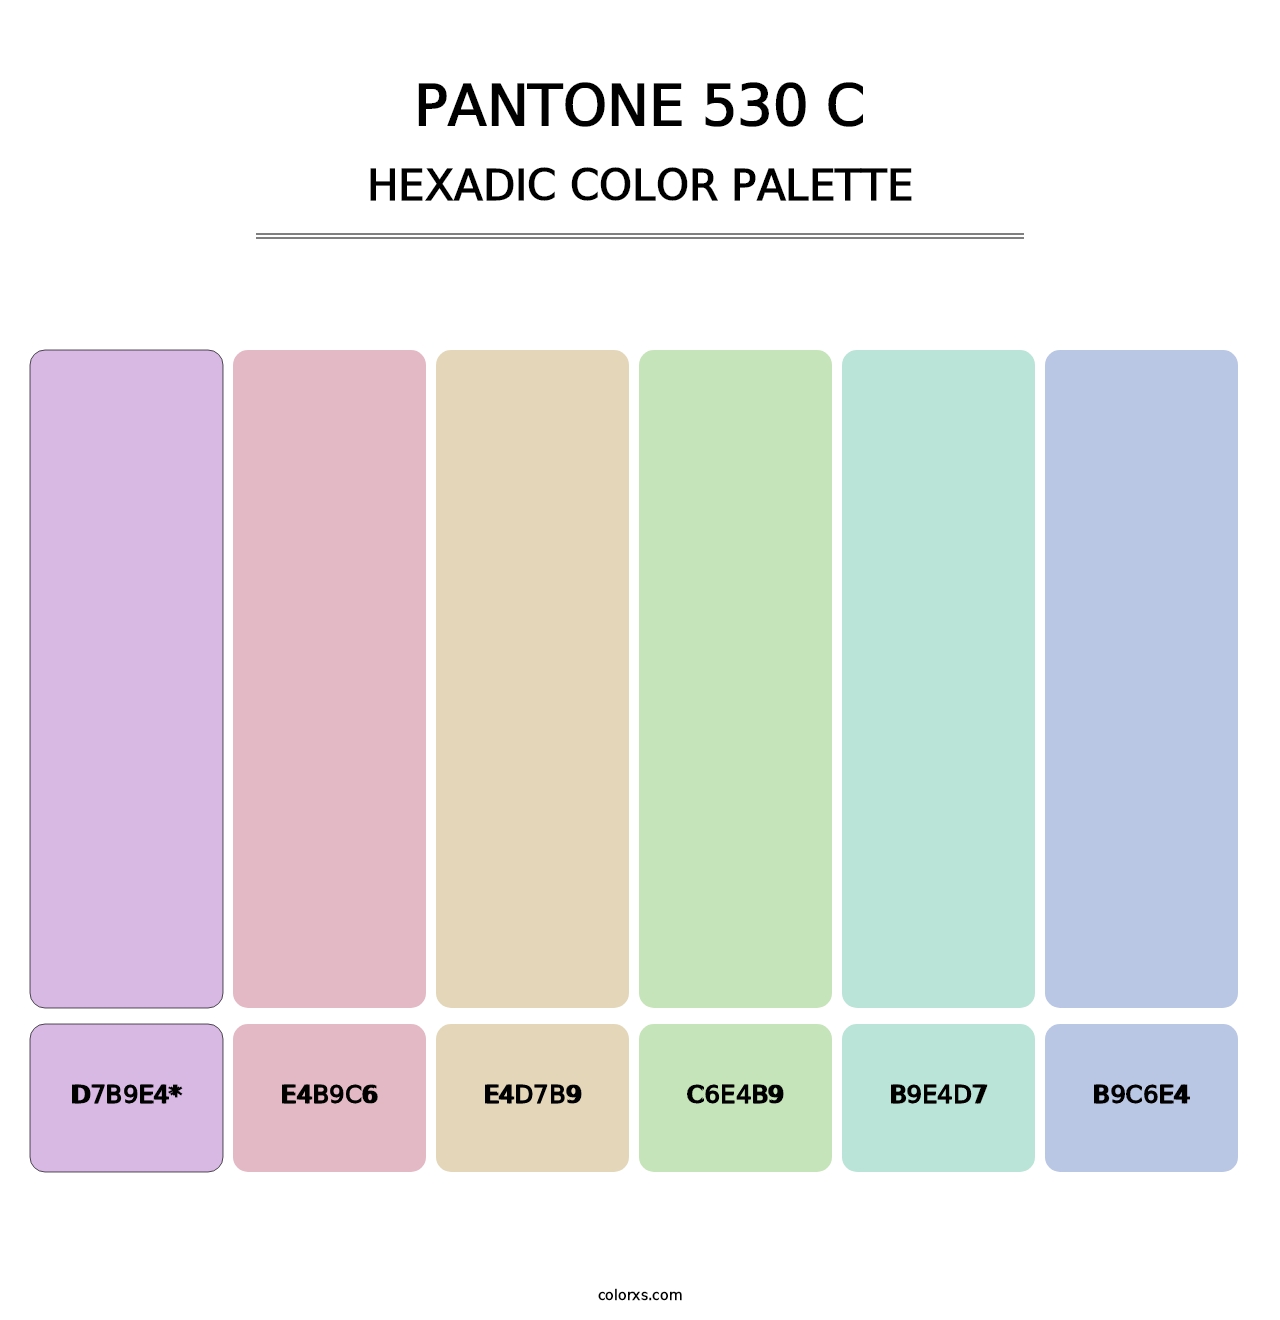 PANTONE 530 C - Hexadic Color Palette